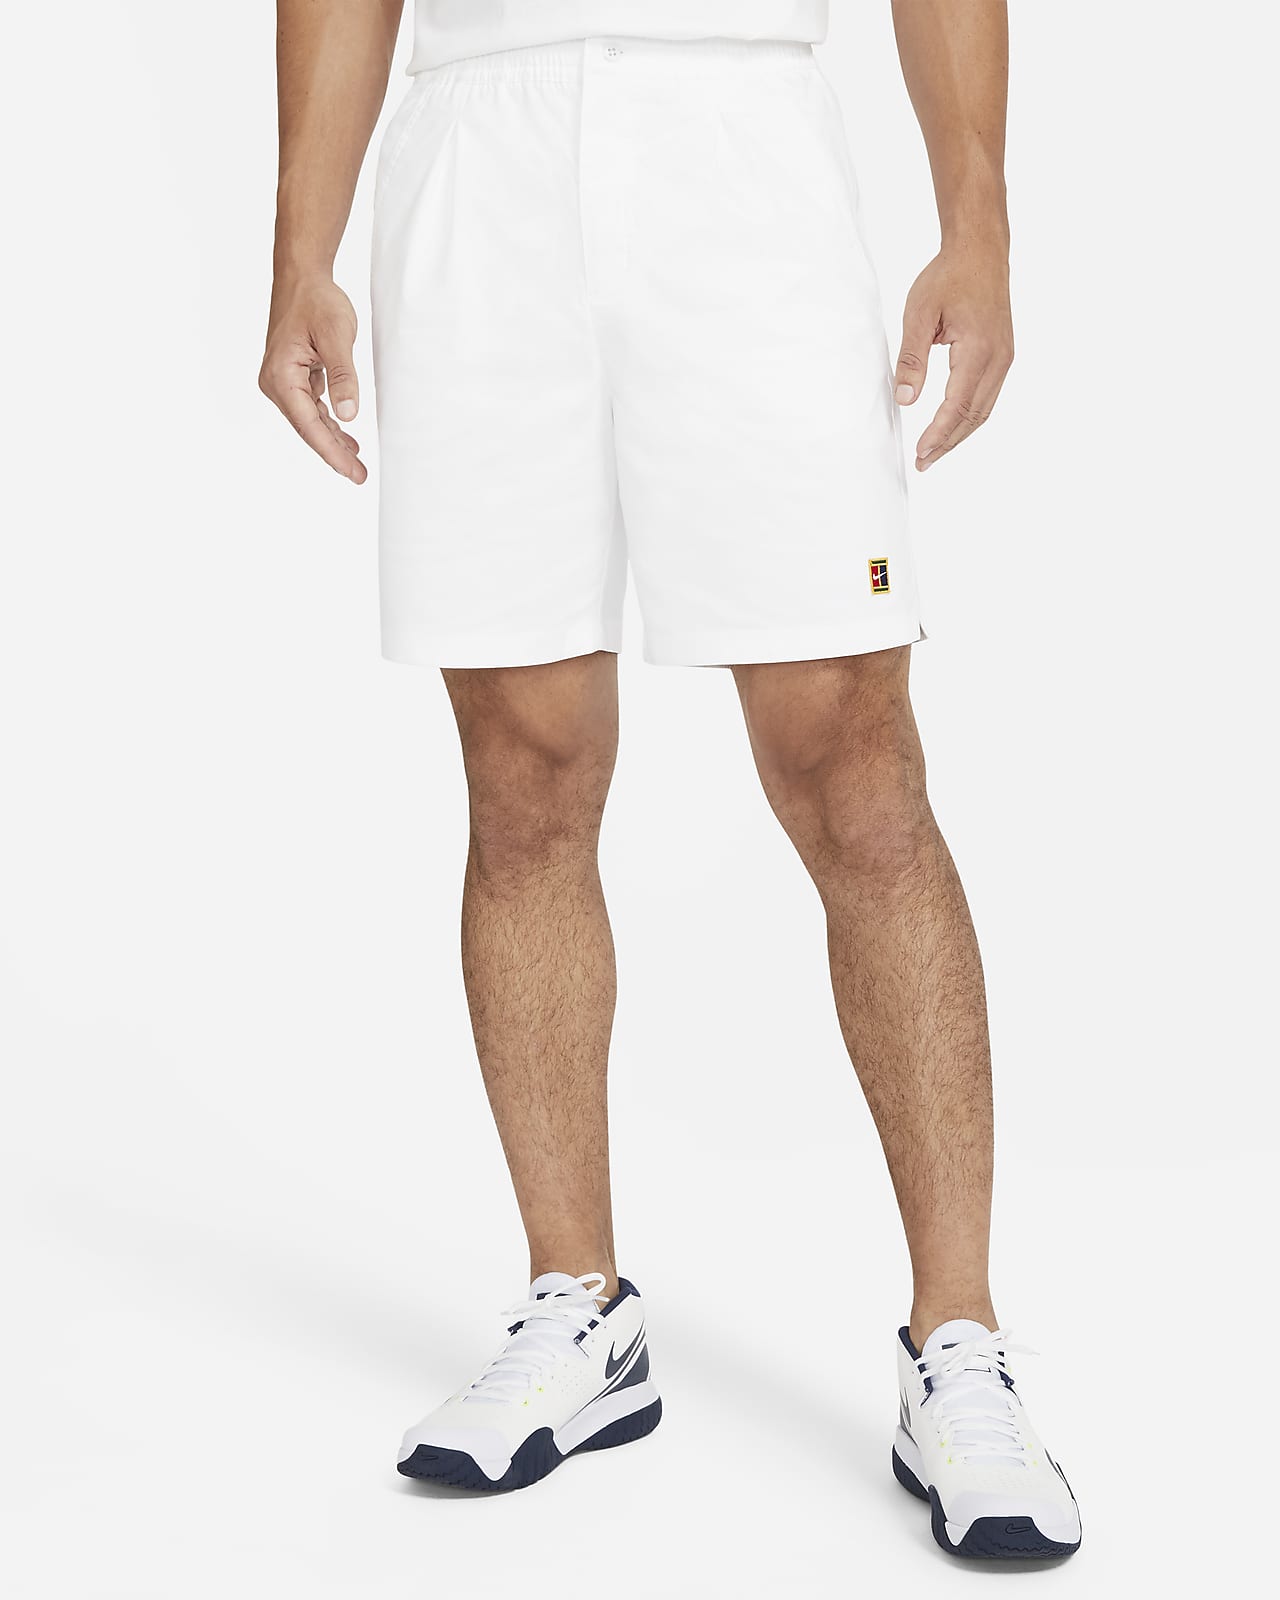 NikeCourt Men's Tennis Shorts. Nike CZ